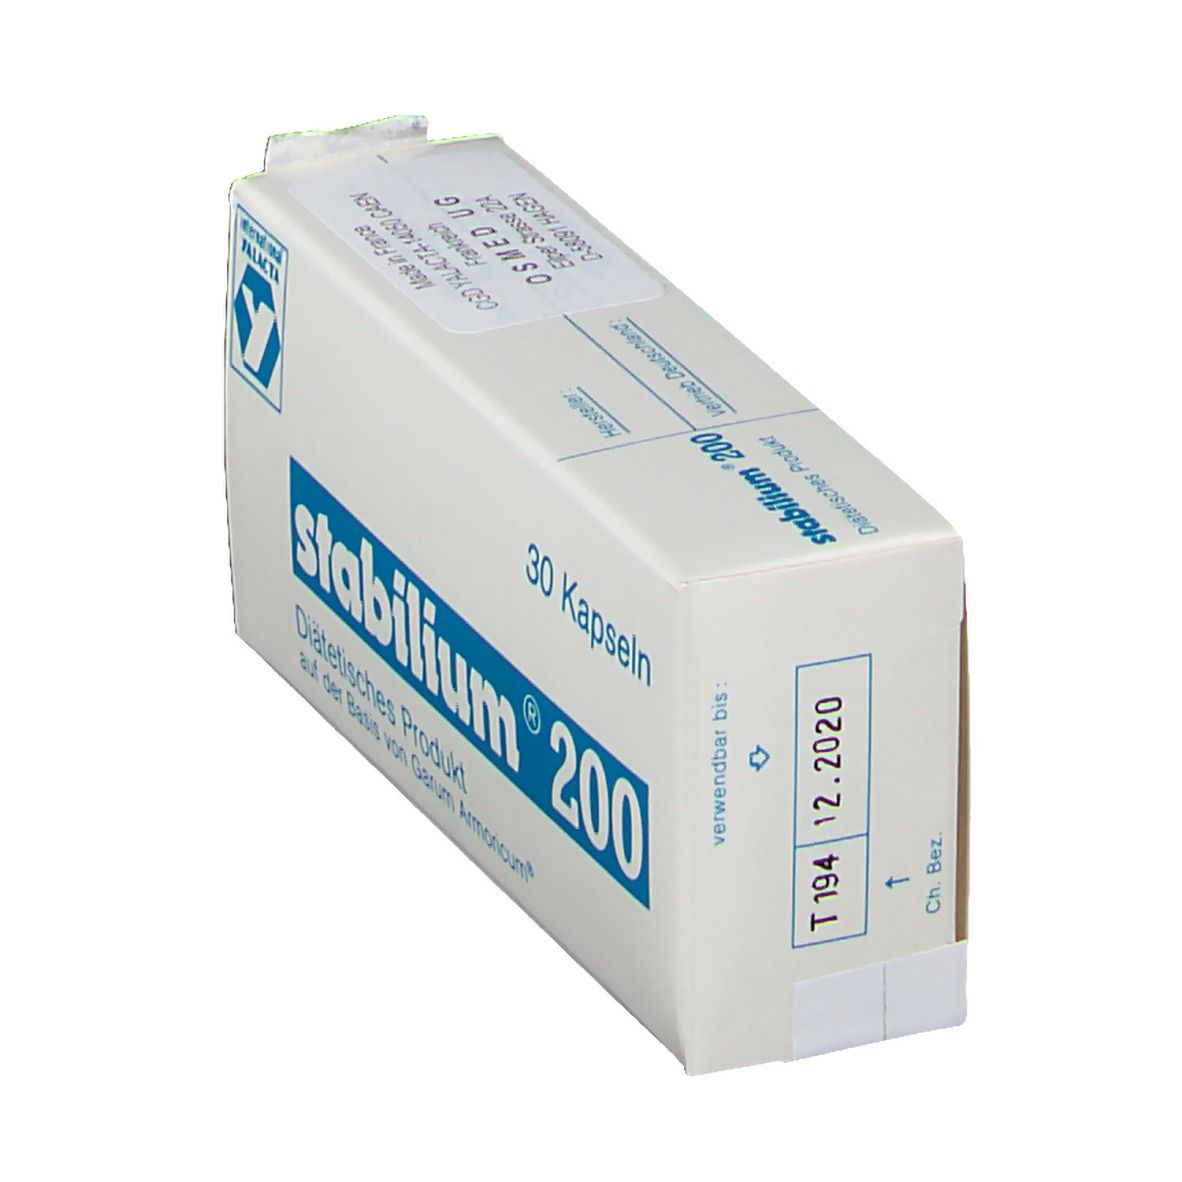 stabilium® 200 Kapseln